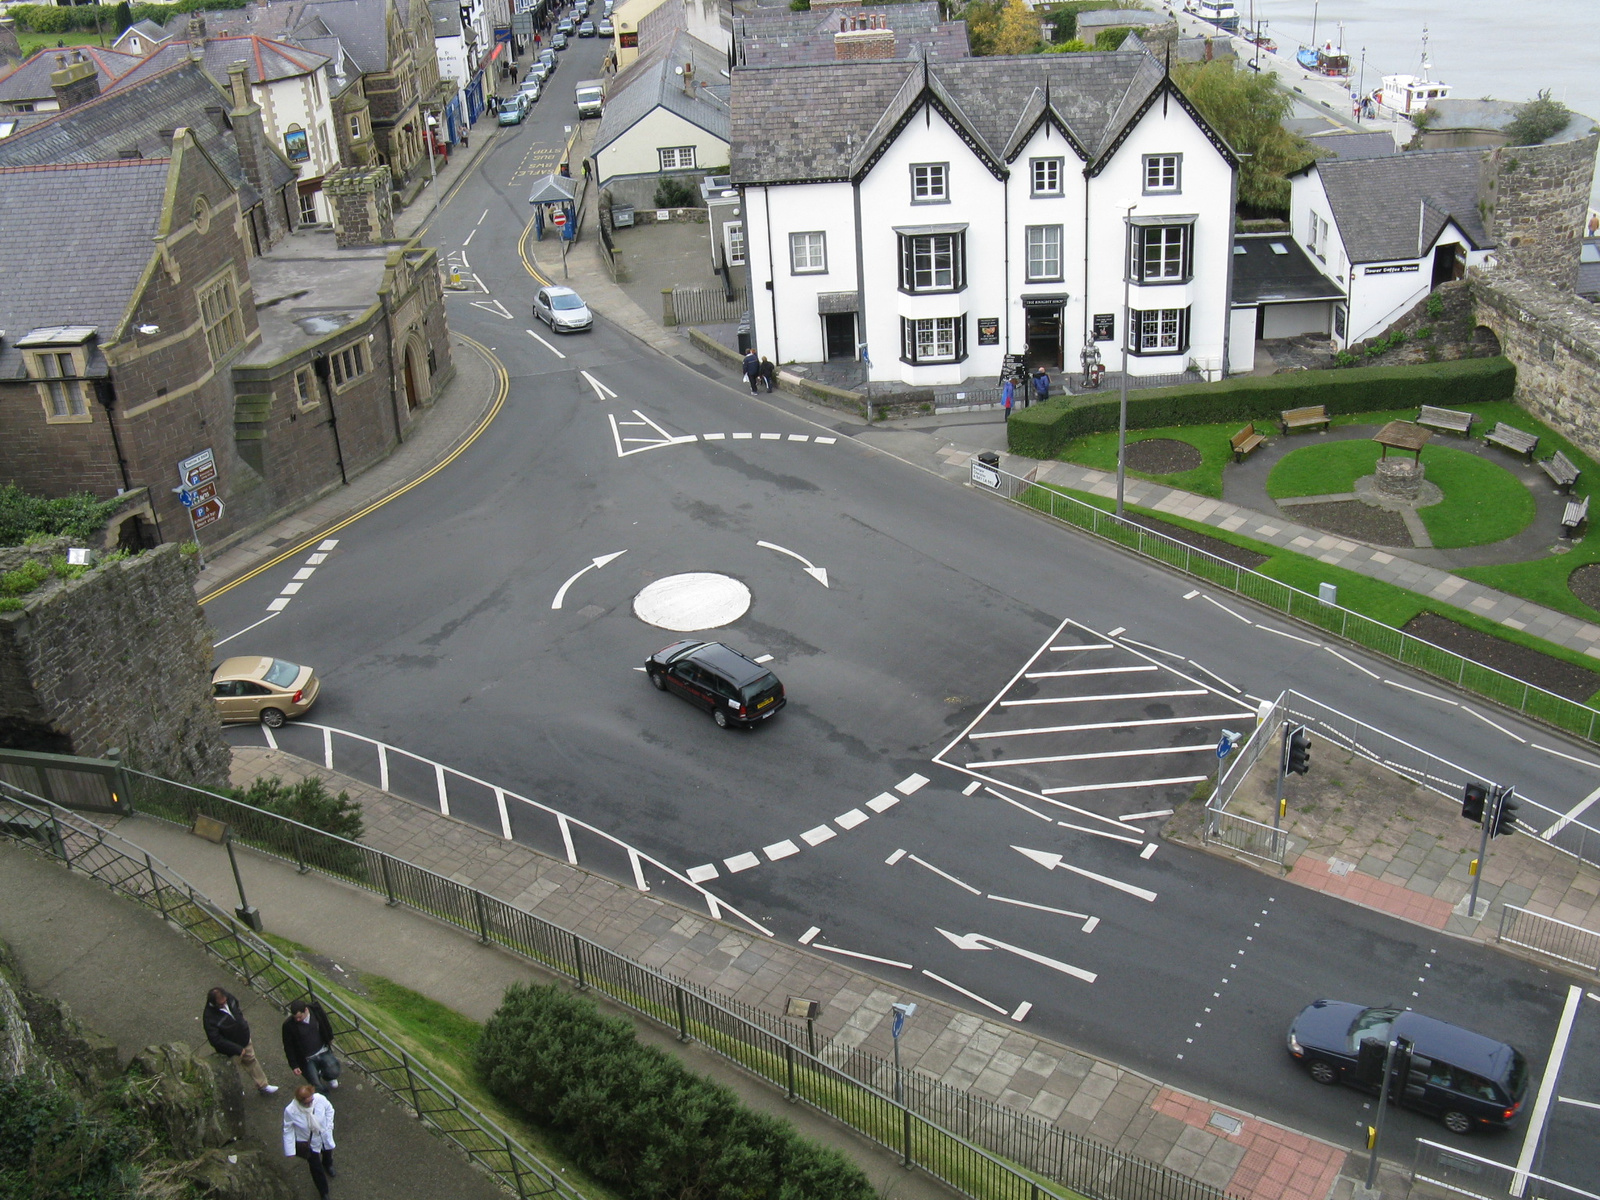 Small roundabout